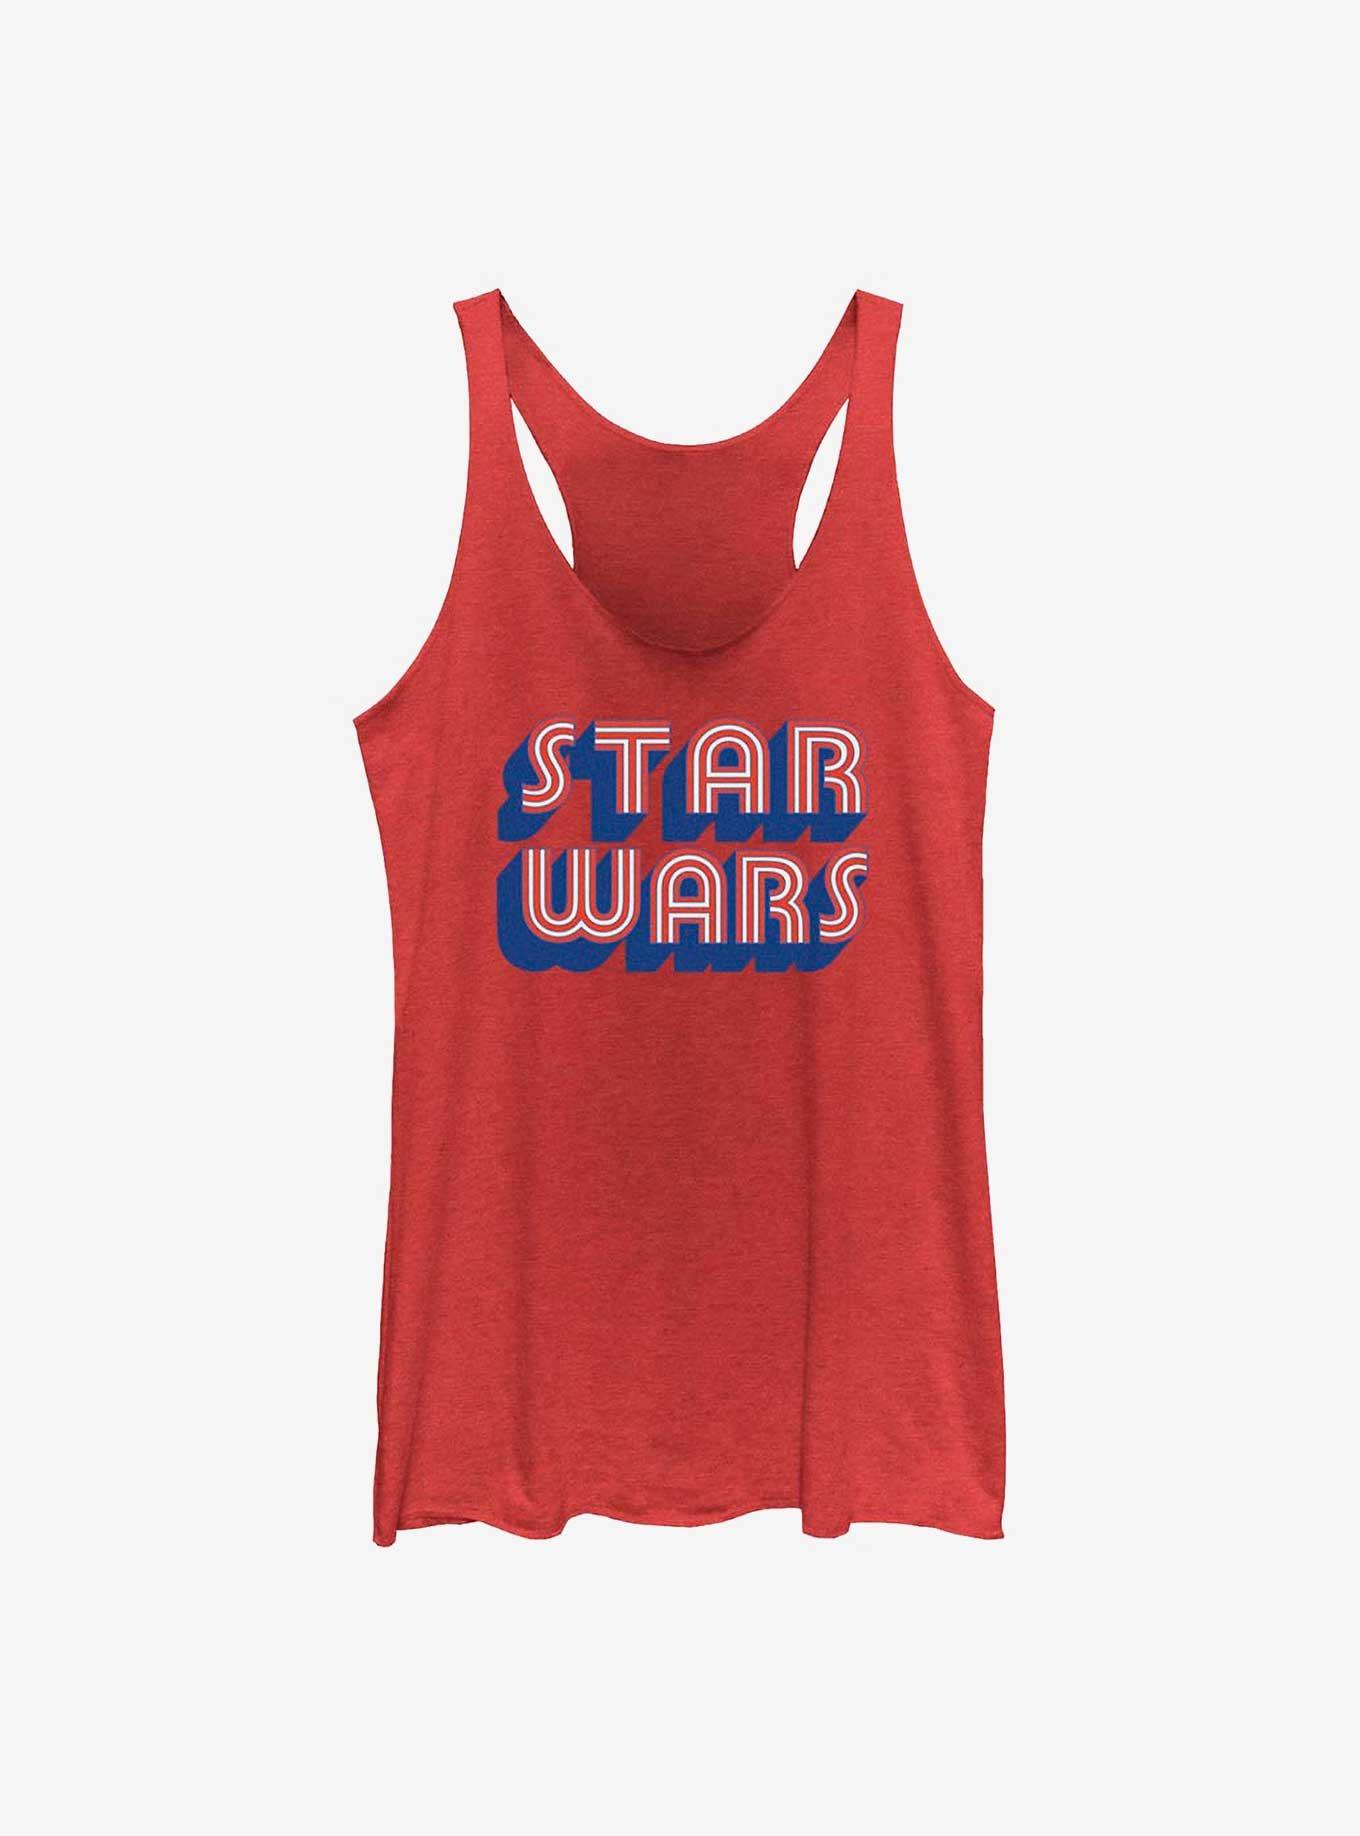 Star Wars Stars and Stripes Logo Girls Tank